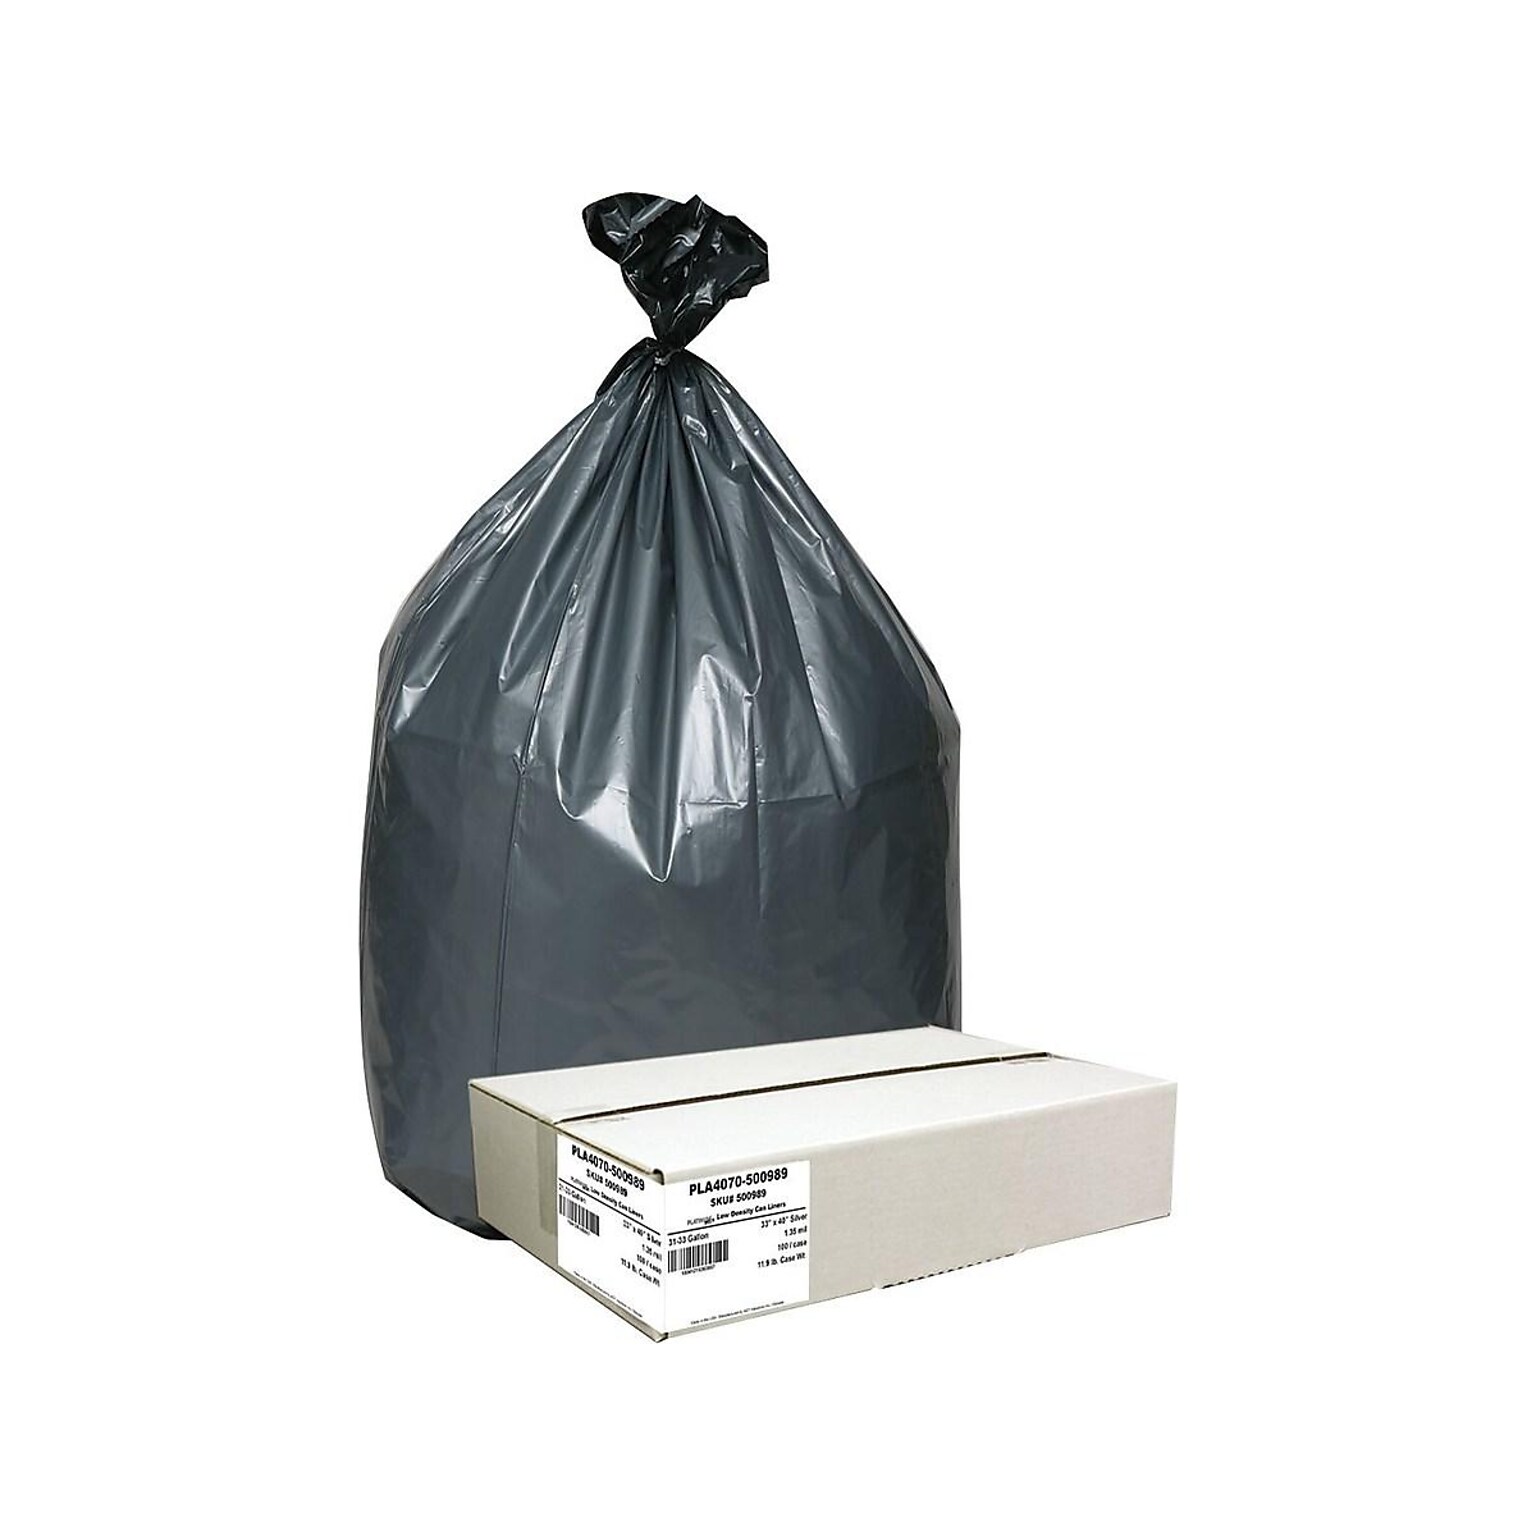 Berry Global Platinum Plus 33 Gallon Industrial Trash Bag, 33 x 40, Low Density, 1.35 mil, Gray, 100 Bags/Box (PLA4070)